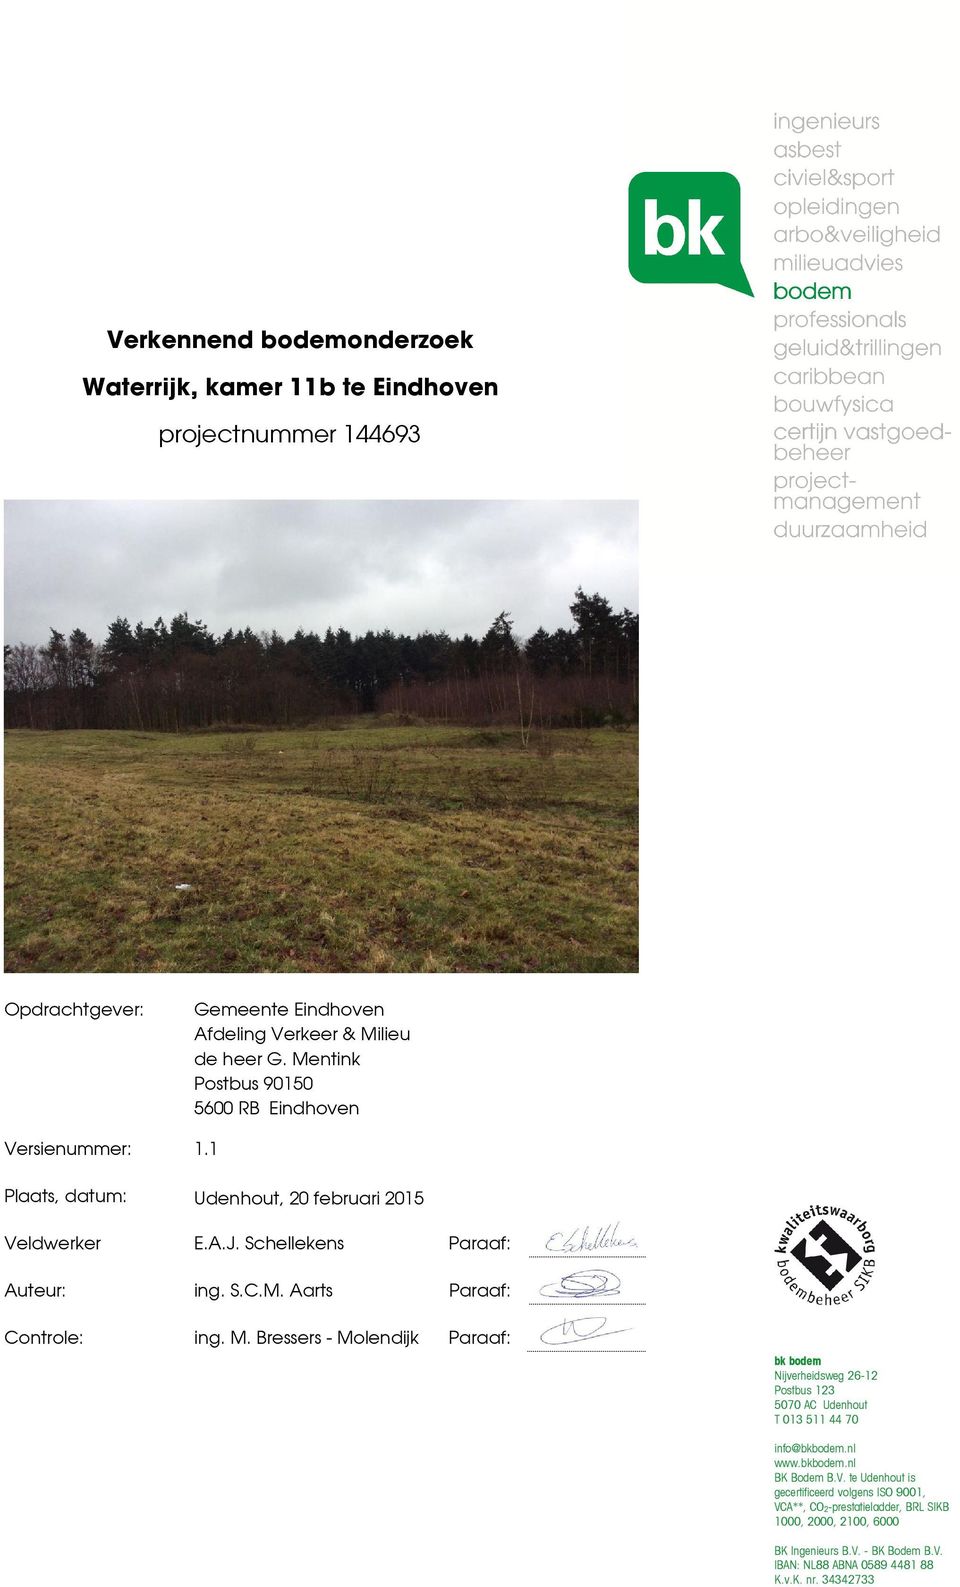 M. Bressers - Molendijk Paraaf: bk bodem Nijverheidsweg 26-12 Postbus 123 57 AC Udenhout T 13 511 44 7 info@bkbodem.nl www.bkbodem.nl BK Bodem B.V.